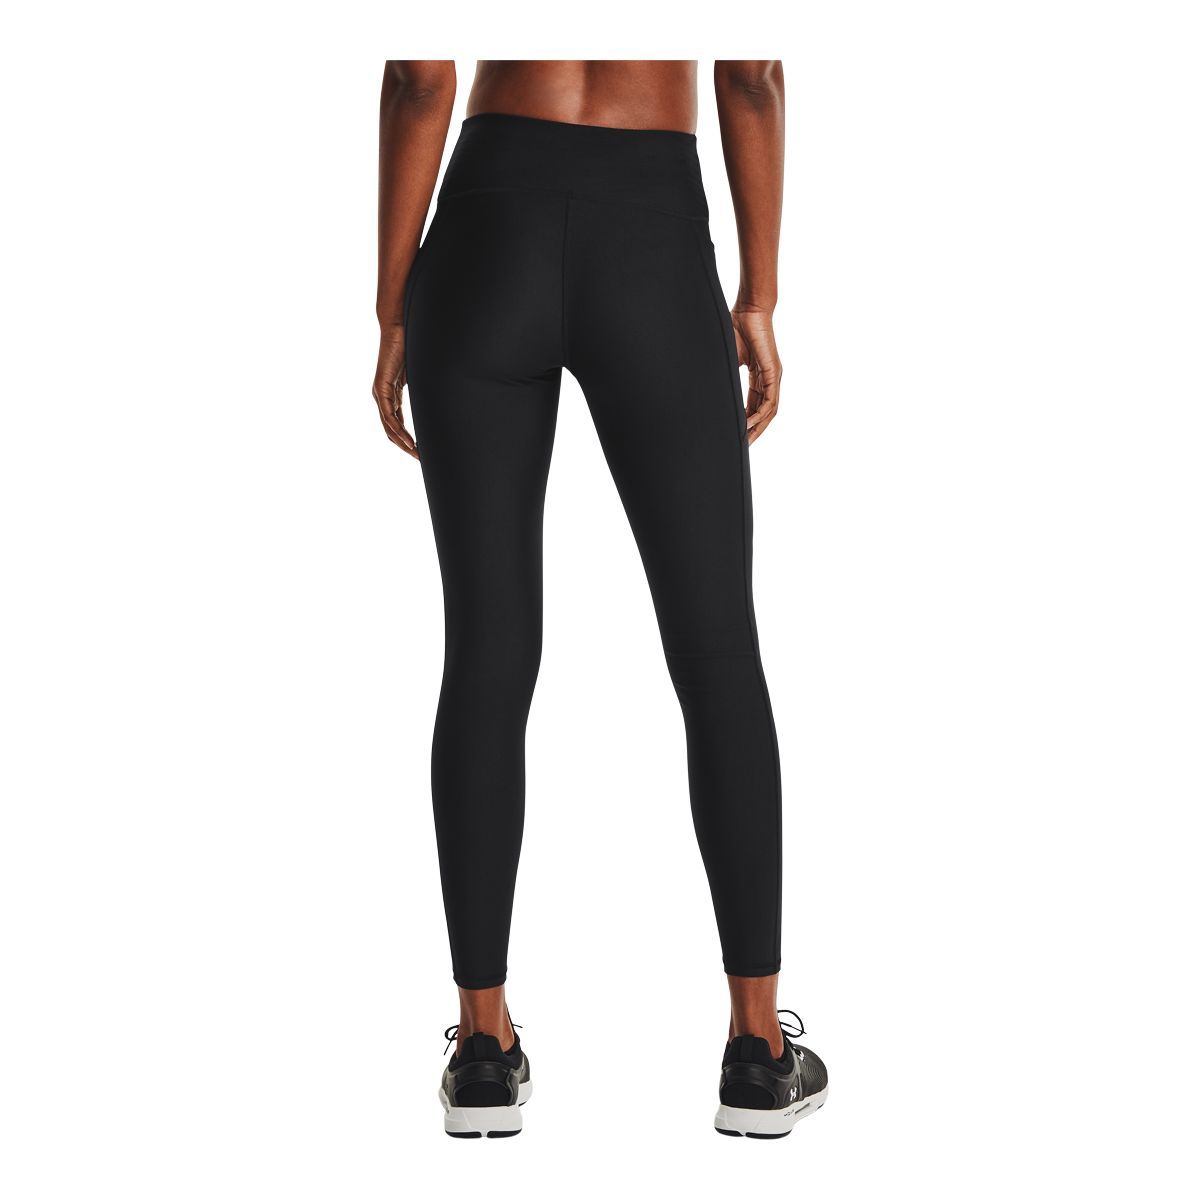 Reebok Womens Wanderlust Capri Compression Athletic Pants, Black, Small 